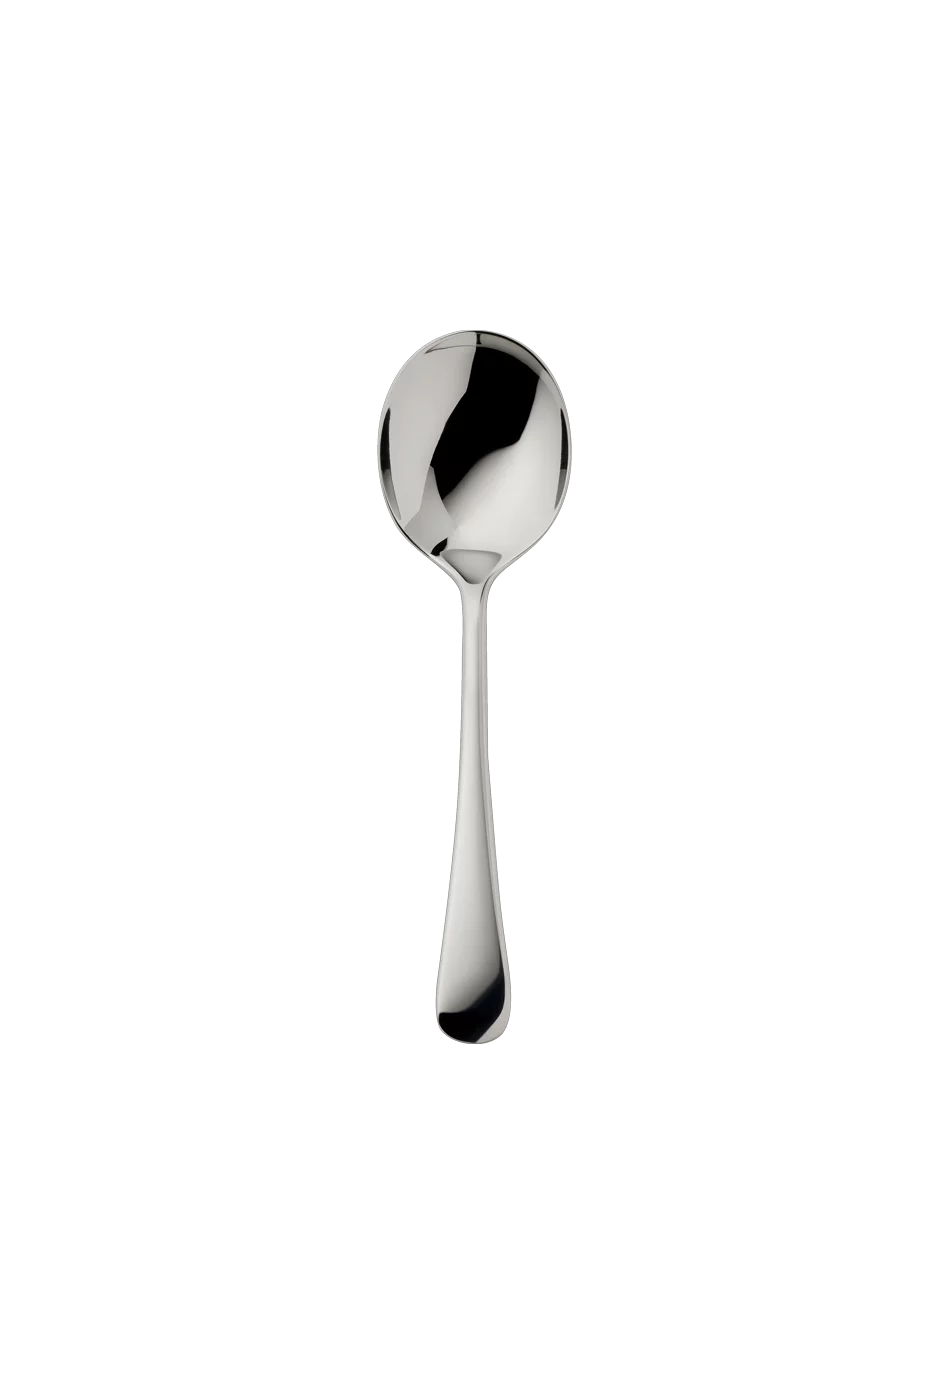 Como Cream Spoon (Broth Spoon) (18/8 stainless steel)